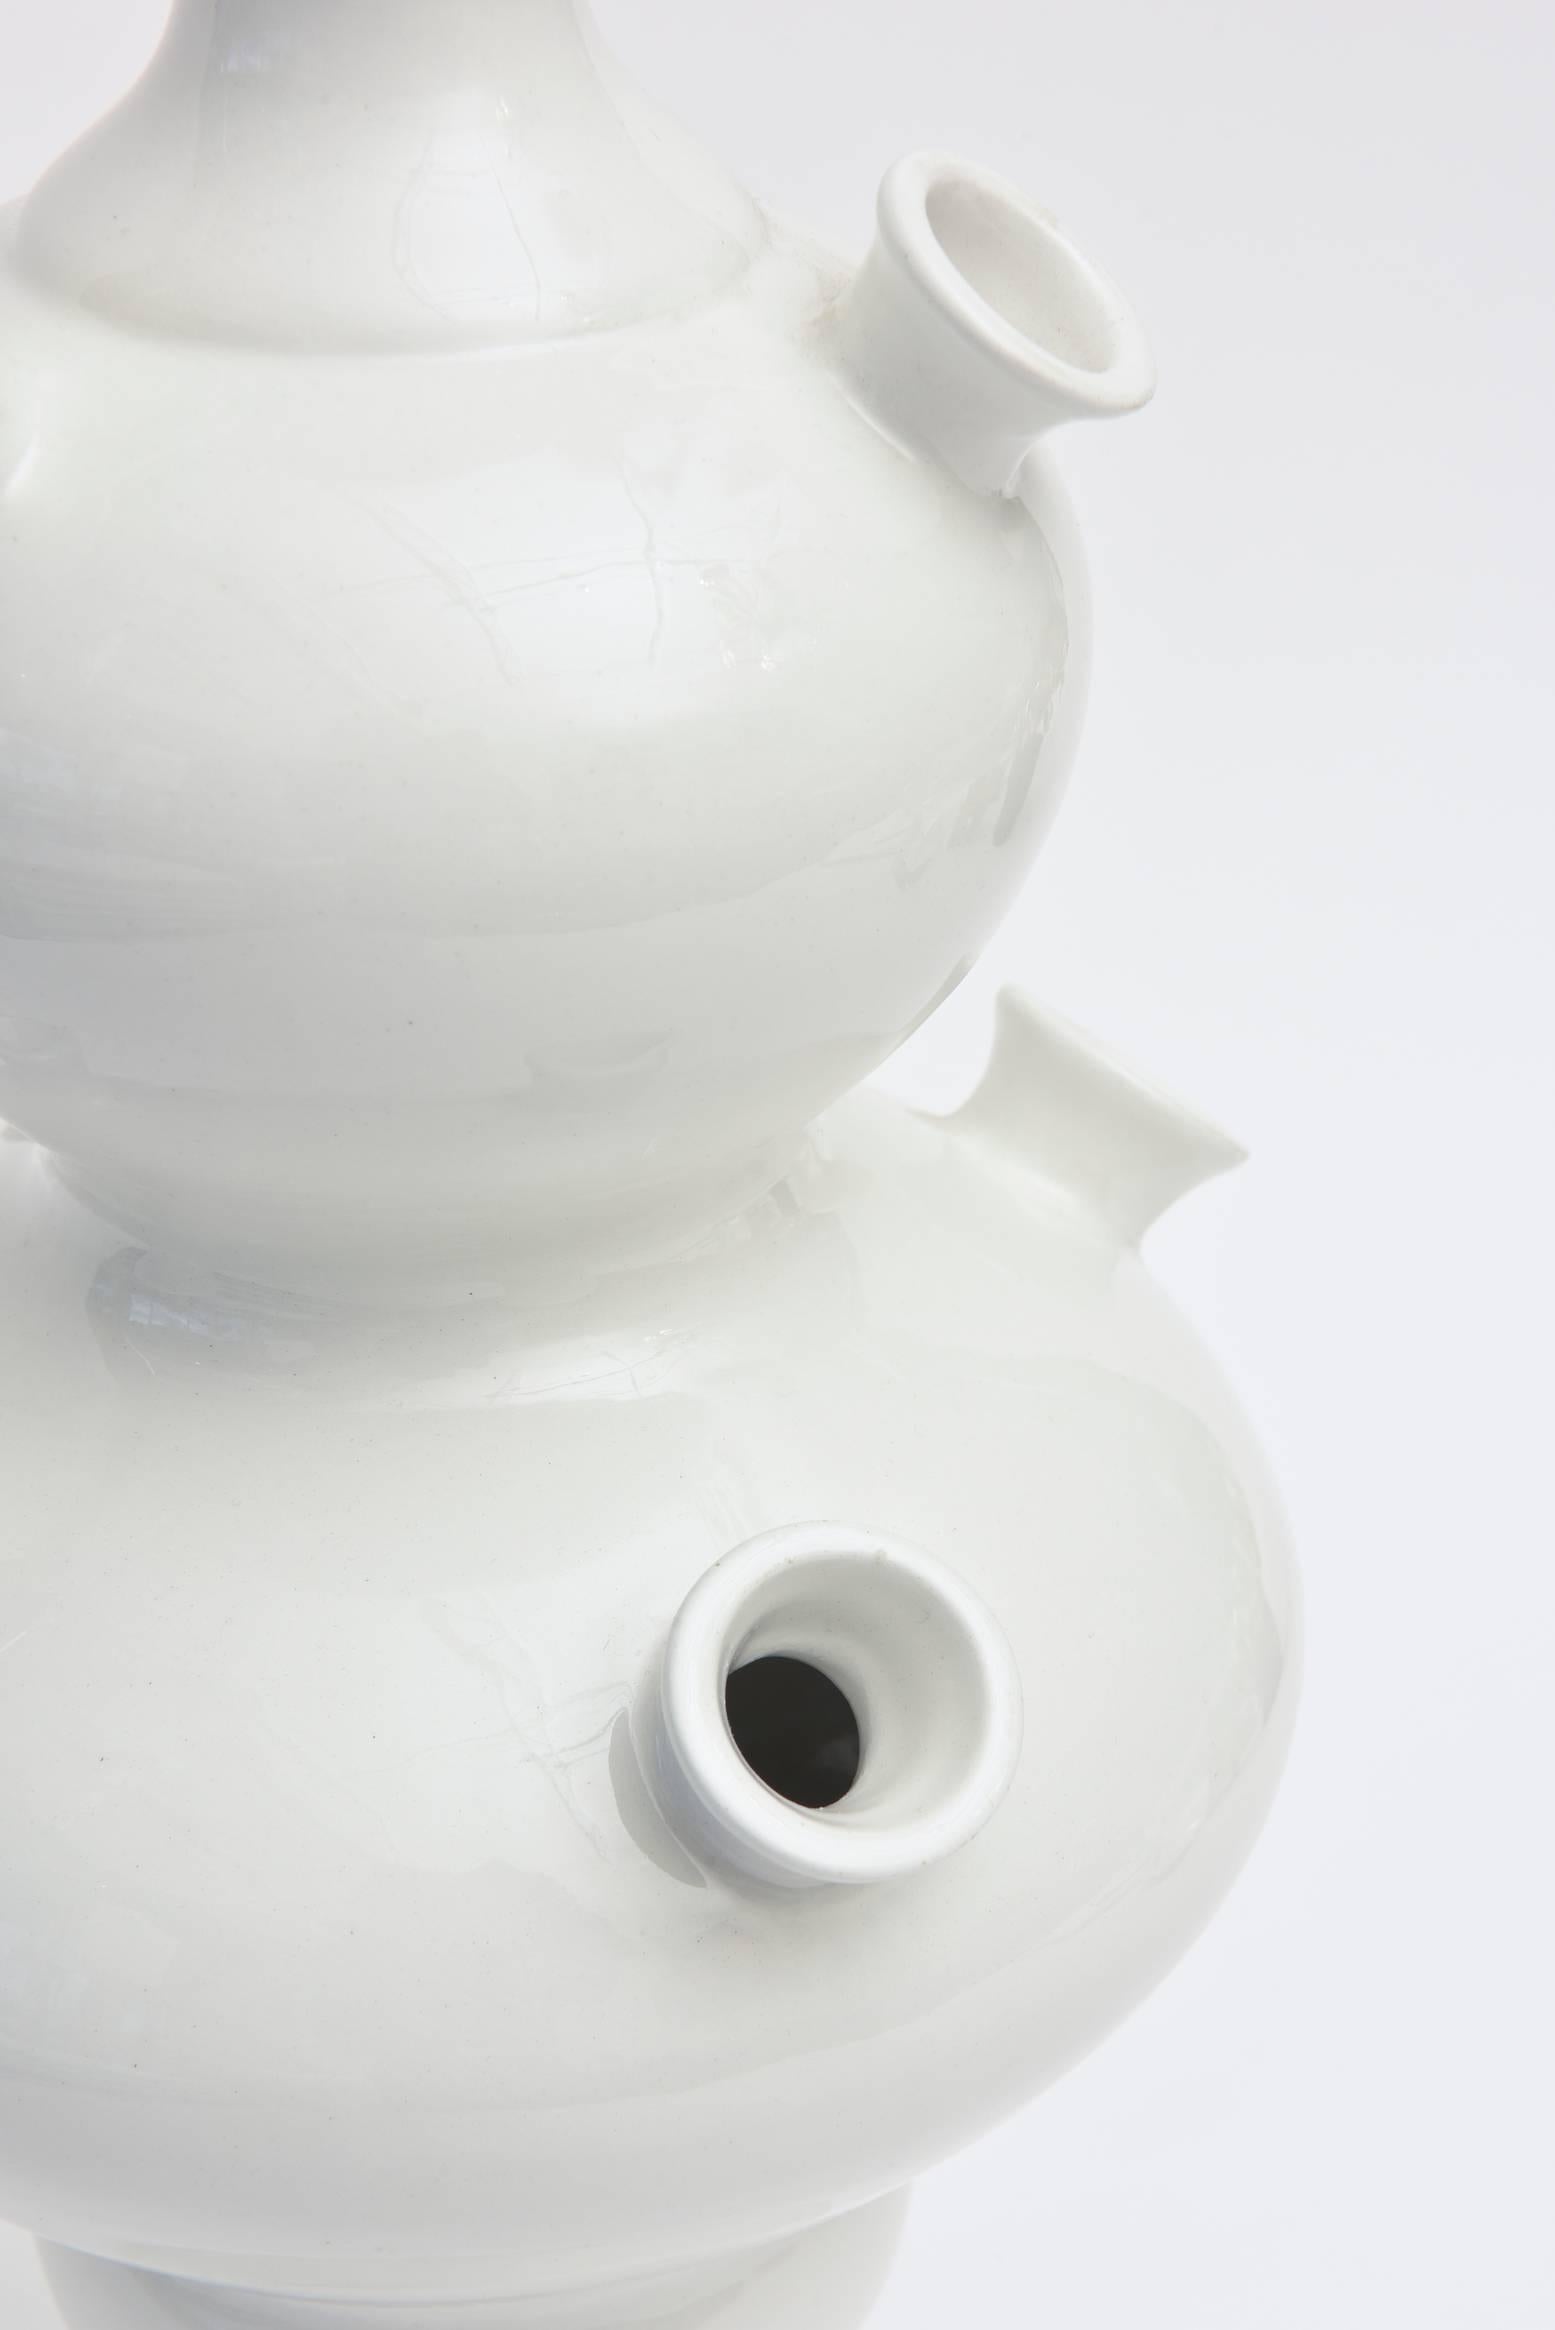 Sculptural Sensual Italian Ceramic Vessel, Vase or Object 1